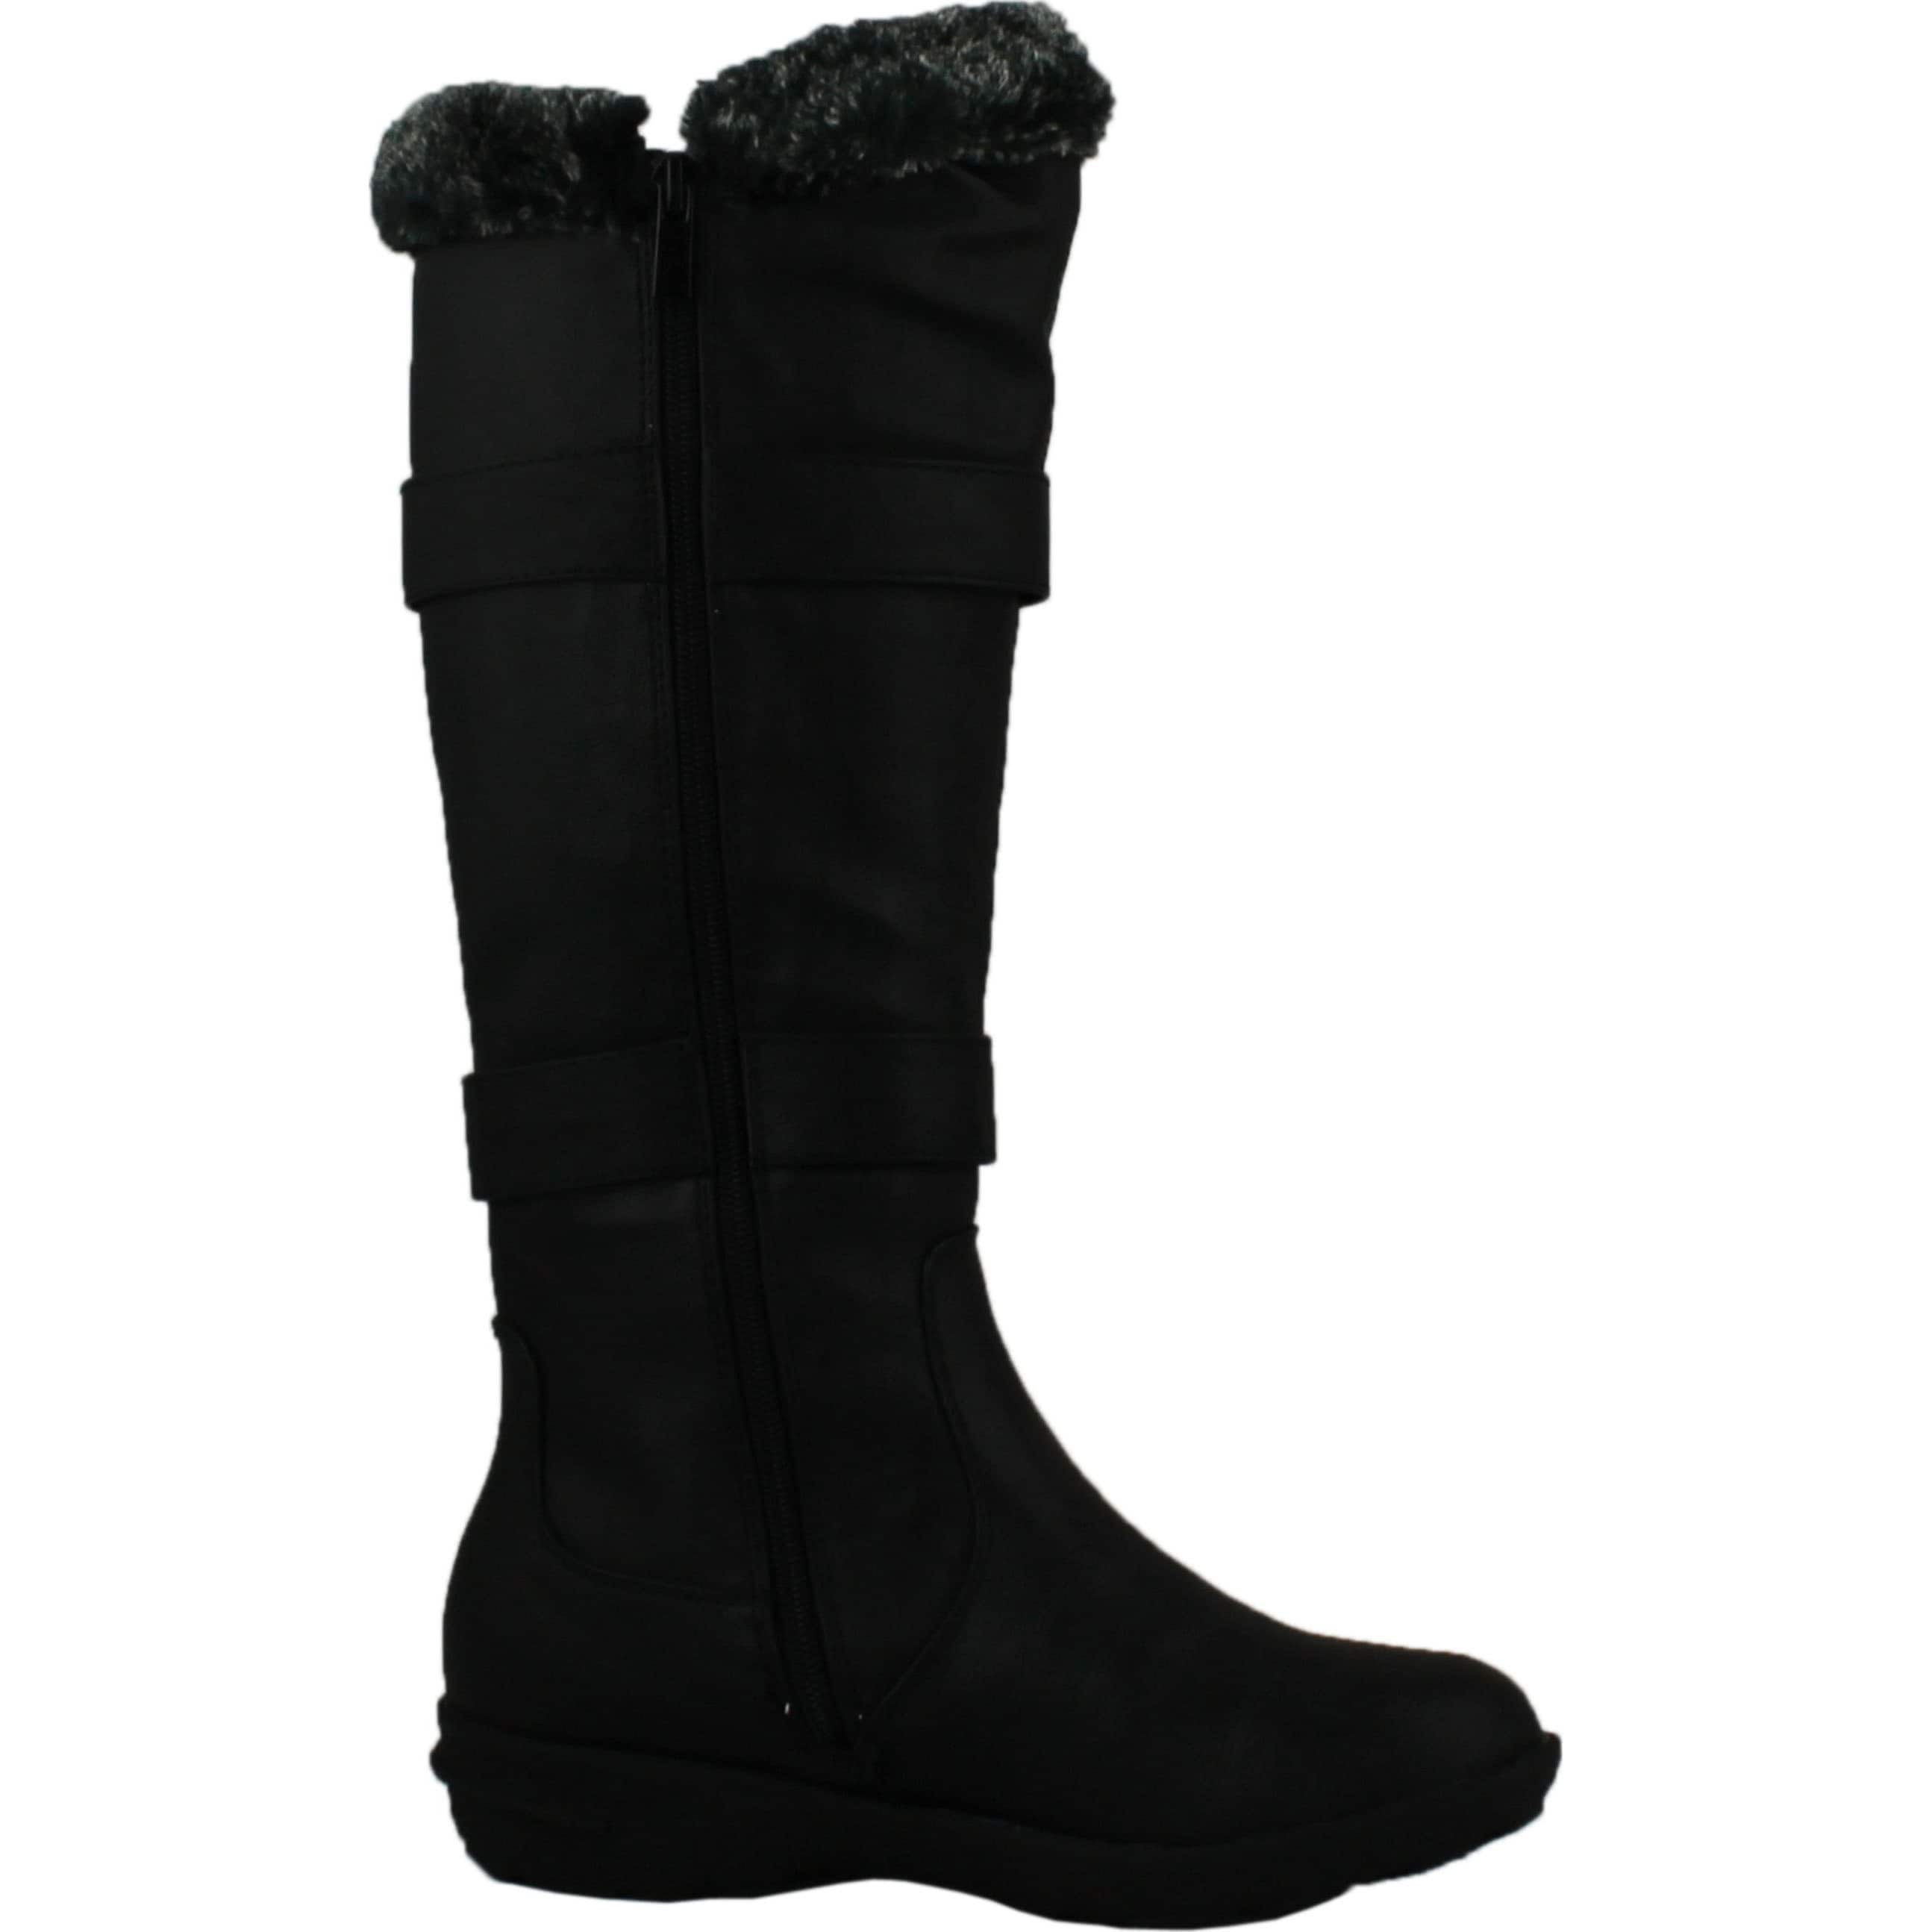 black knee high winter boots